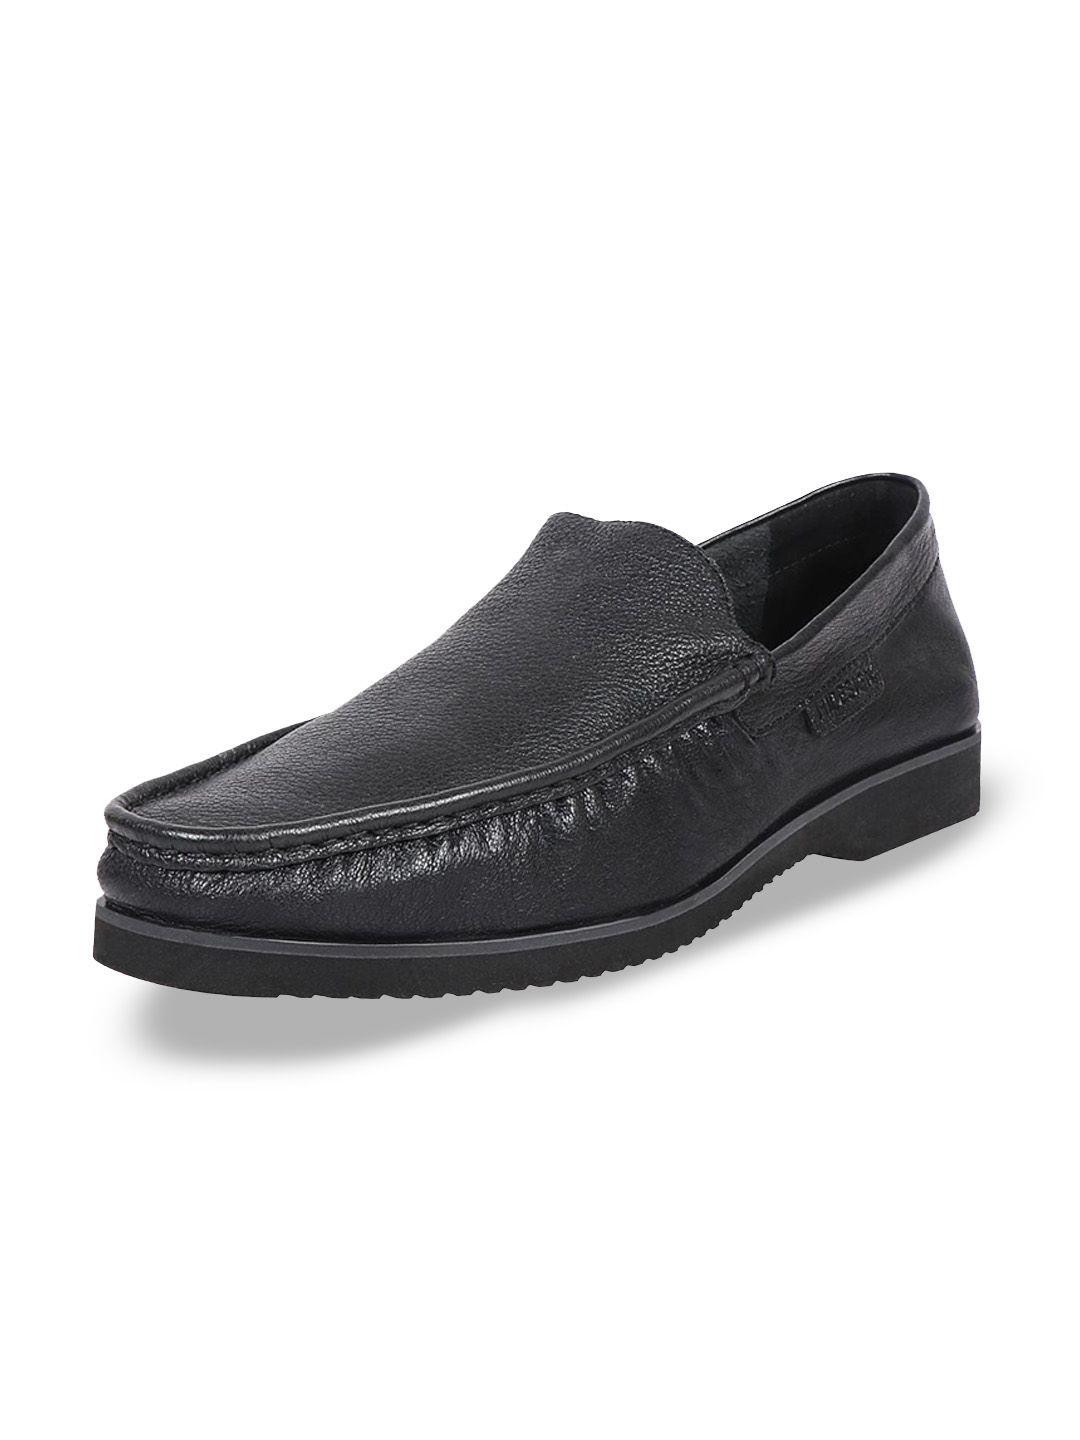 hidesign men black leather loafers